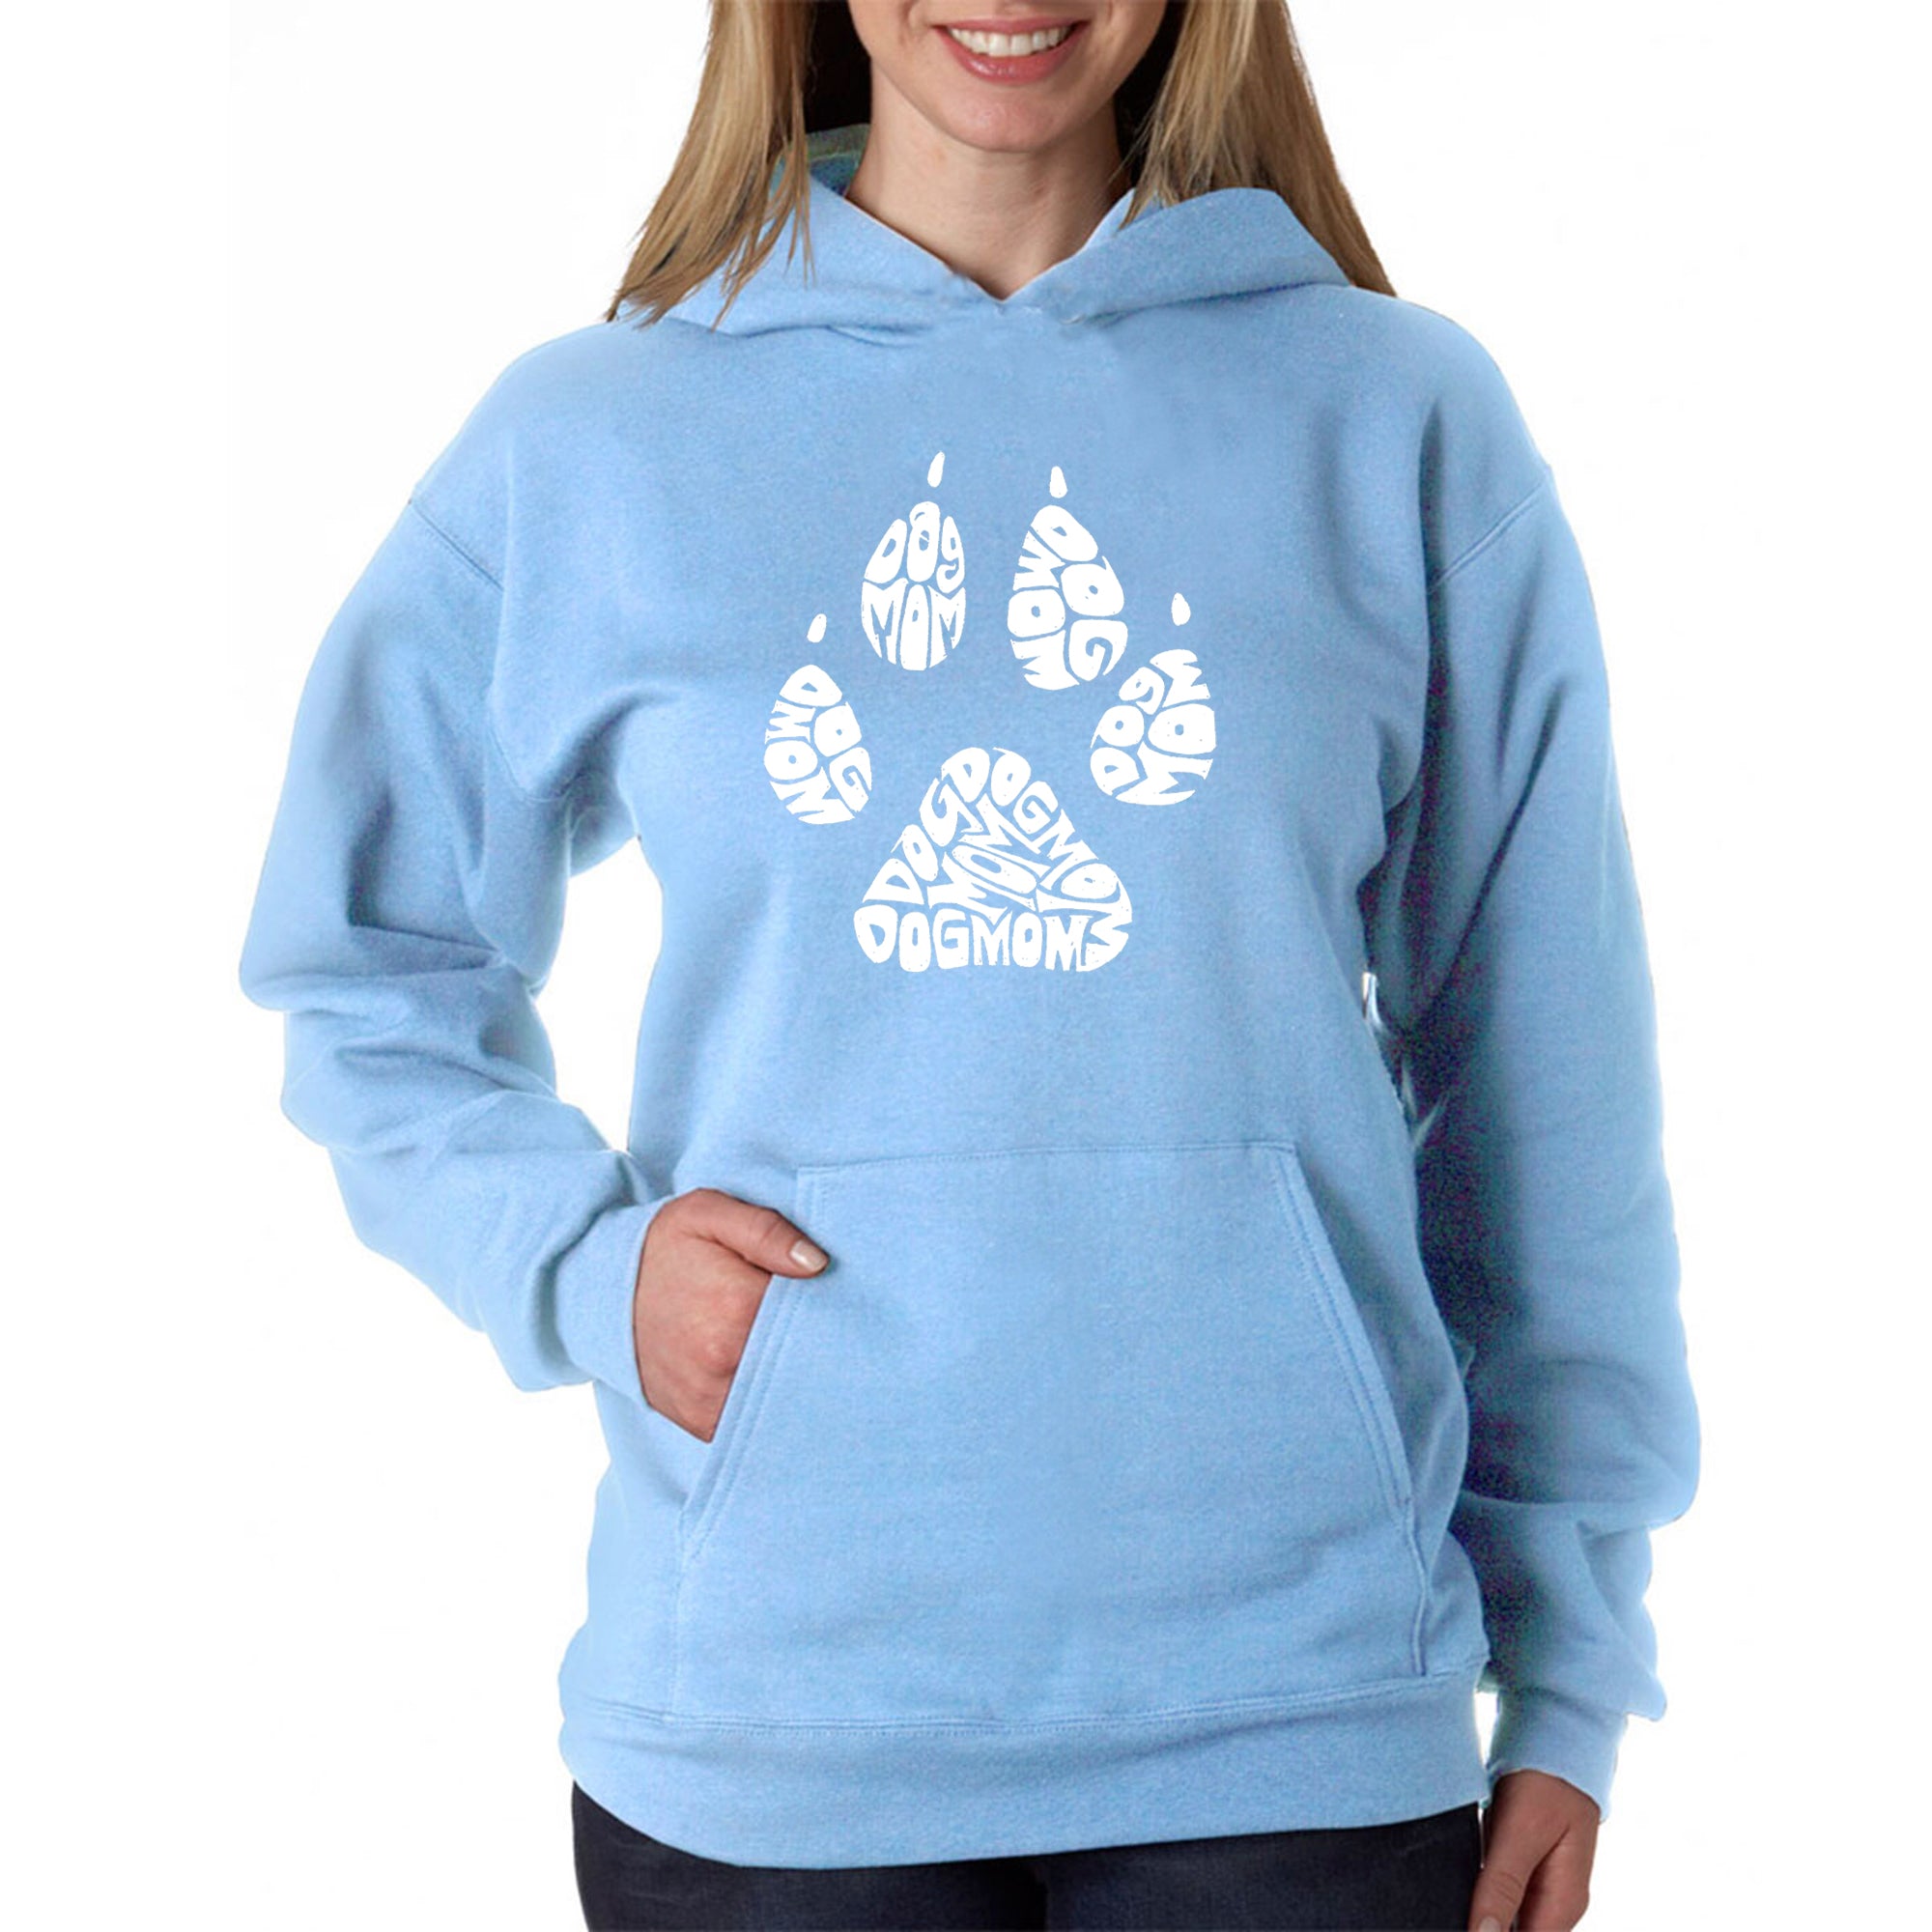 Dog Mom - Women's Word Art Hooded Sweatshirt - Blue - Medium